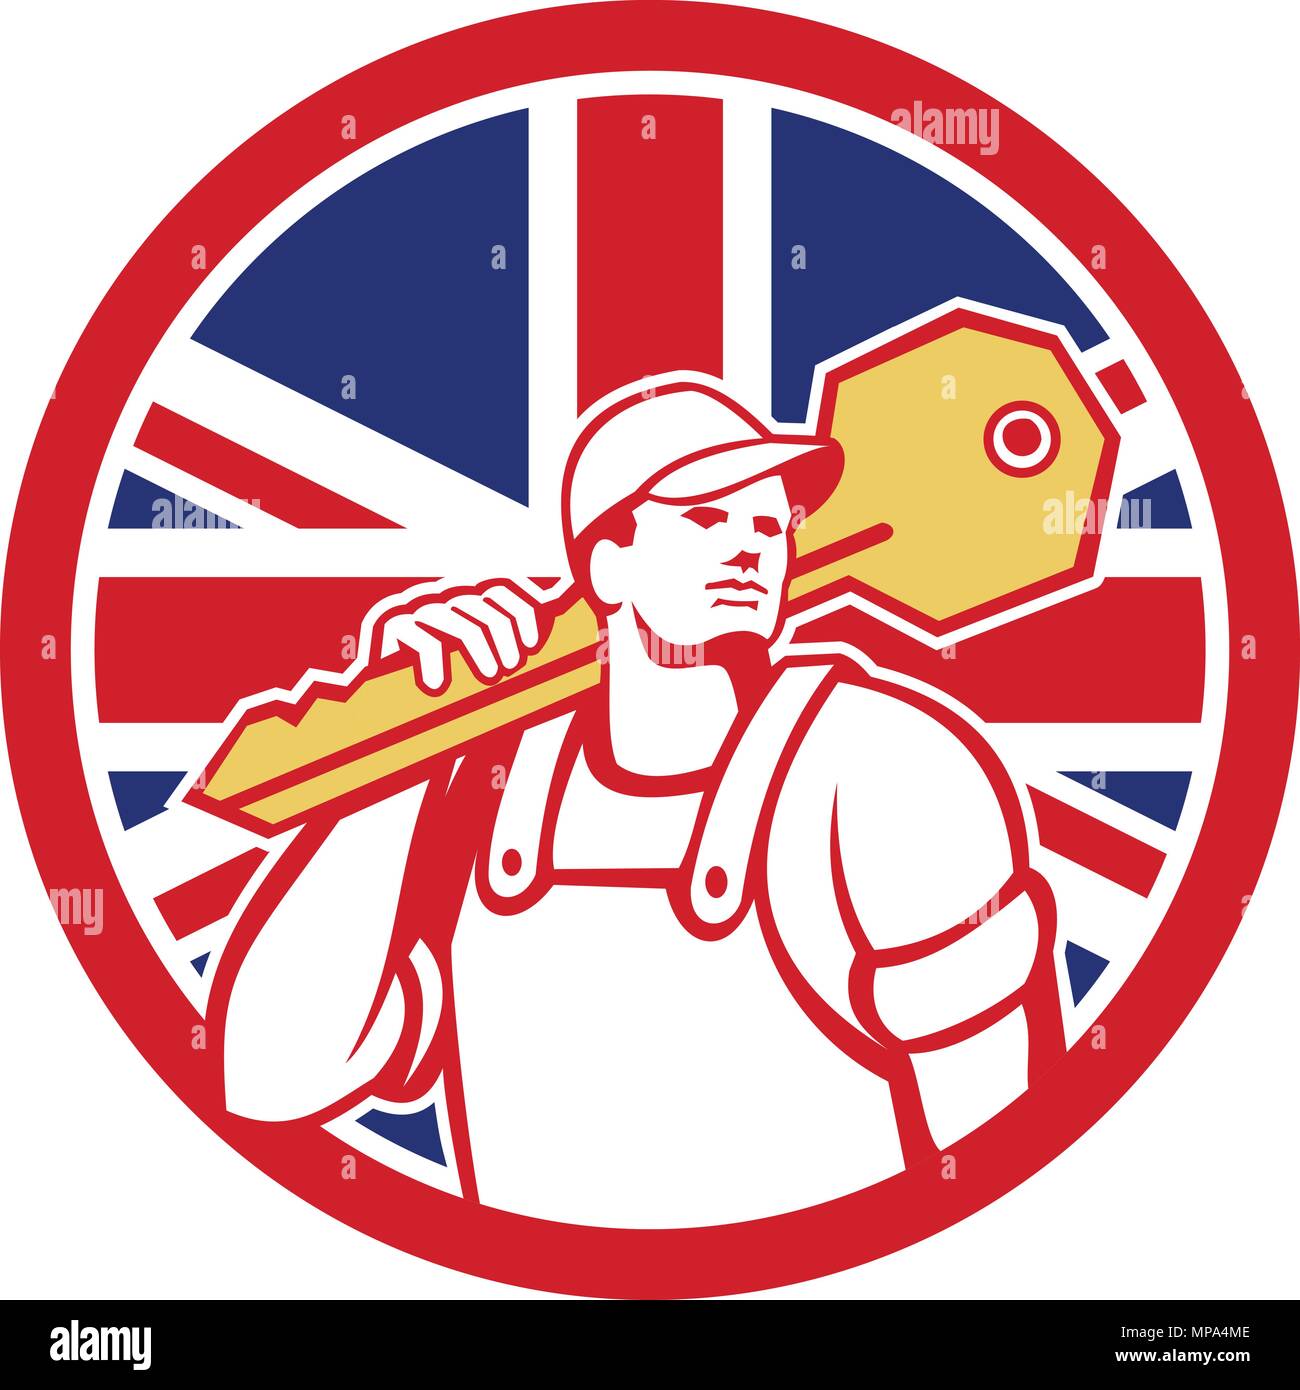 Icon retro style illustration of a British locksmith or key cutter carrying a giant key with United Kingdom UK, Great Britain Union Jack flag set insi Stock Vector